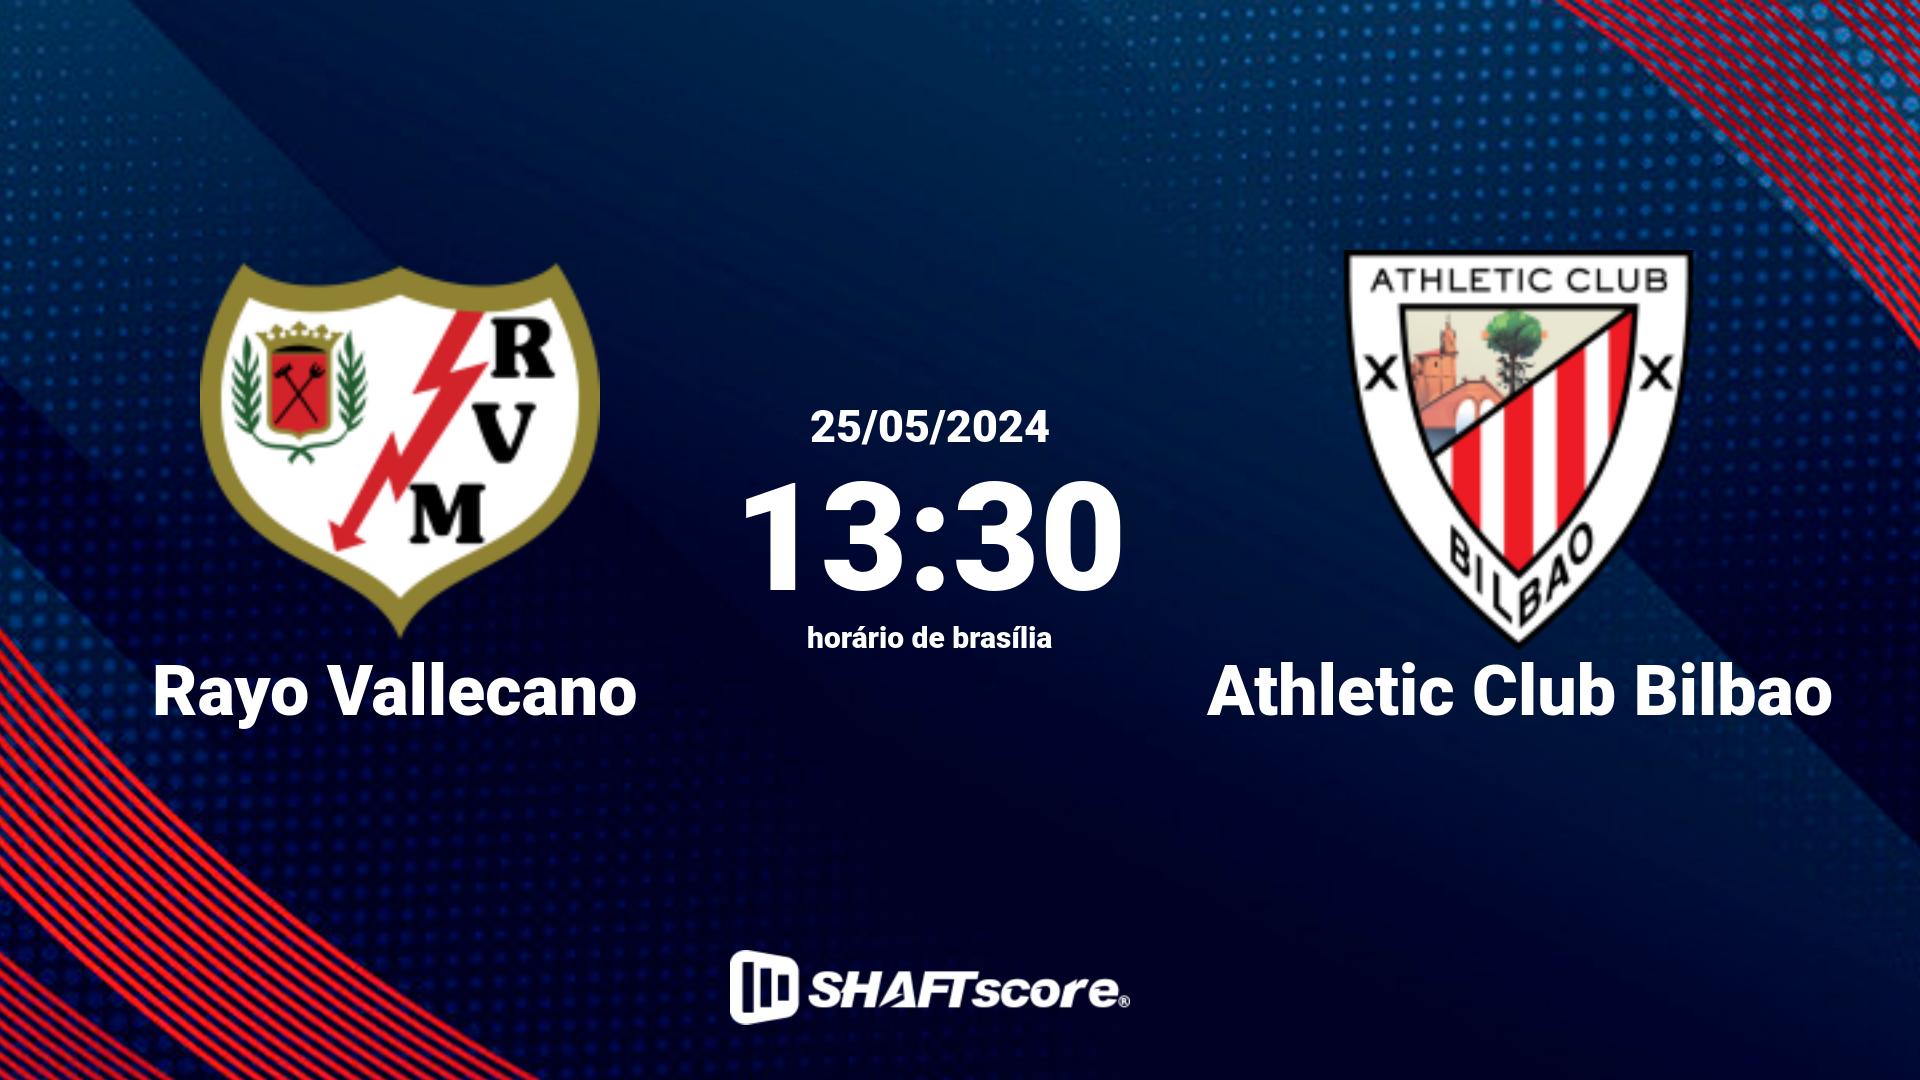 Estatísticas do jogo Rayo Vallecano vs Athletic Club Bilbao 25.05 13:30